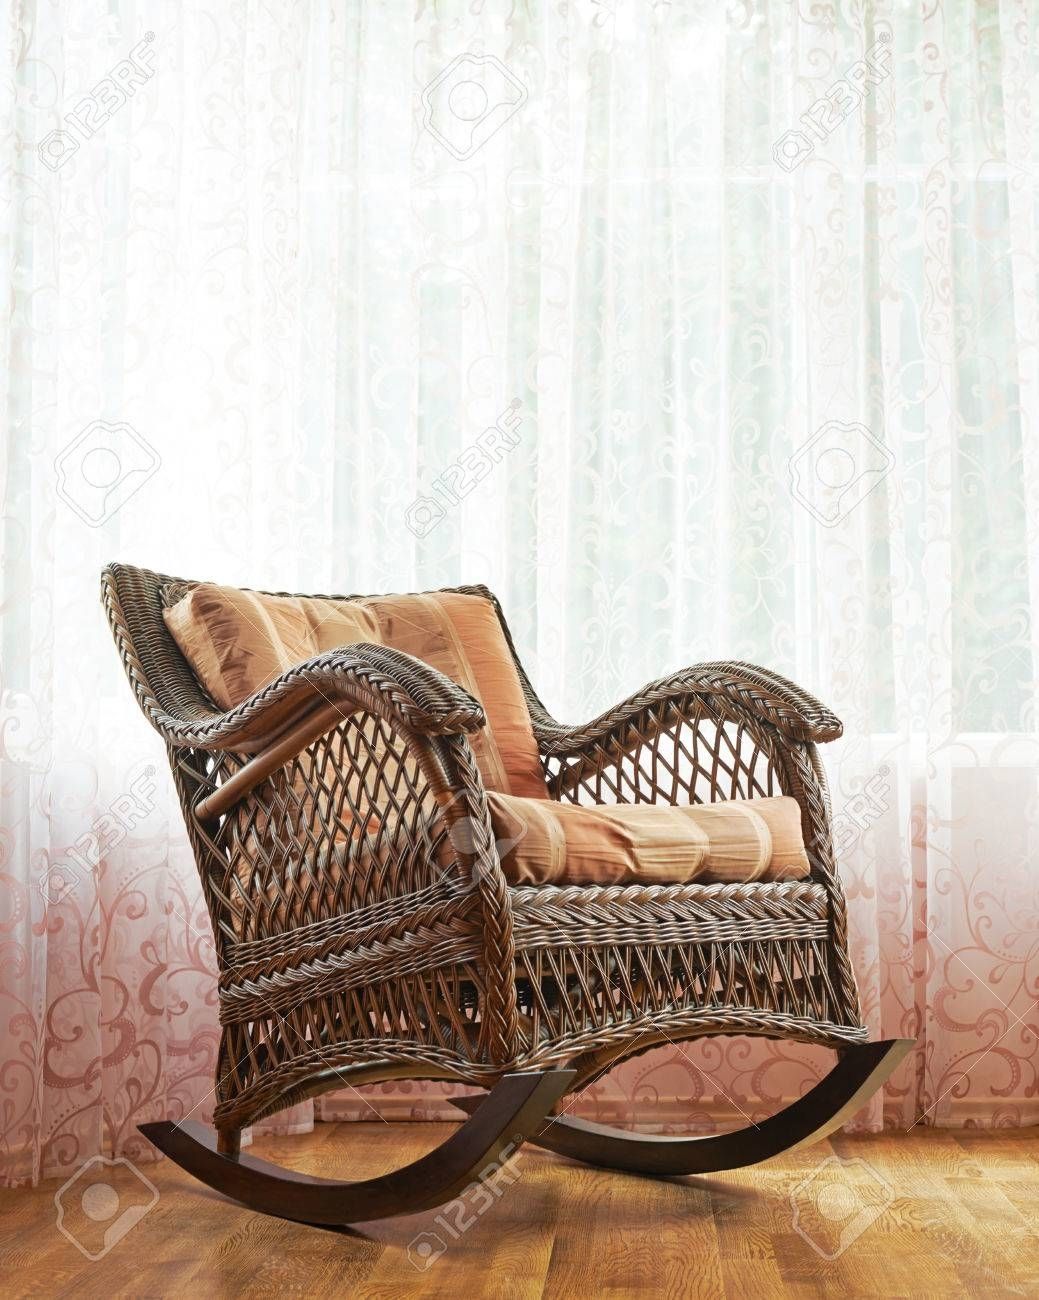 Brown Wicker Rocking Chair Against The Window's Curtains, Indoor Regarding Indoor Wicker Rocking Chairs (Photo 3 of 15)